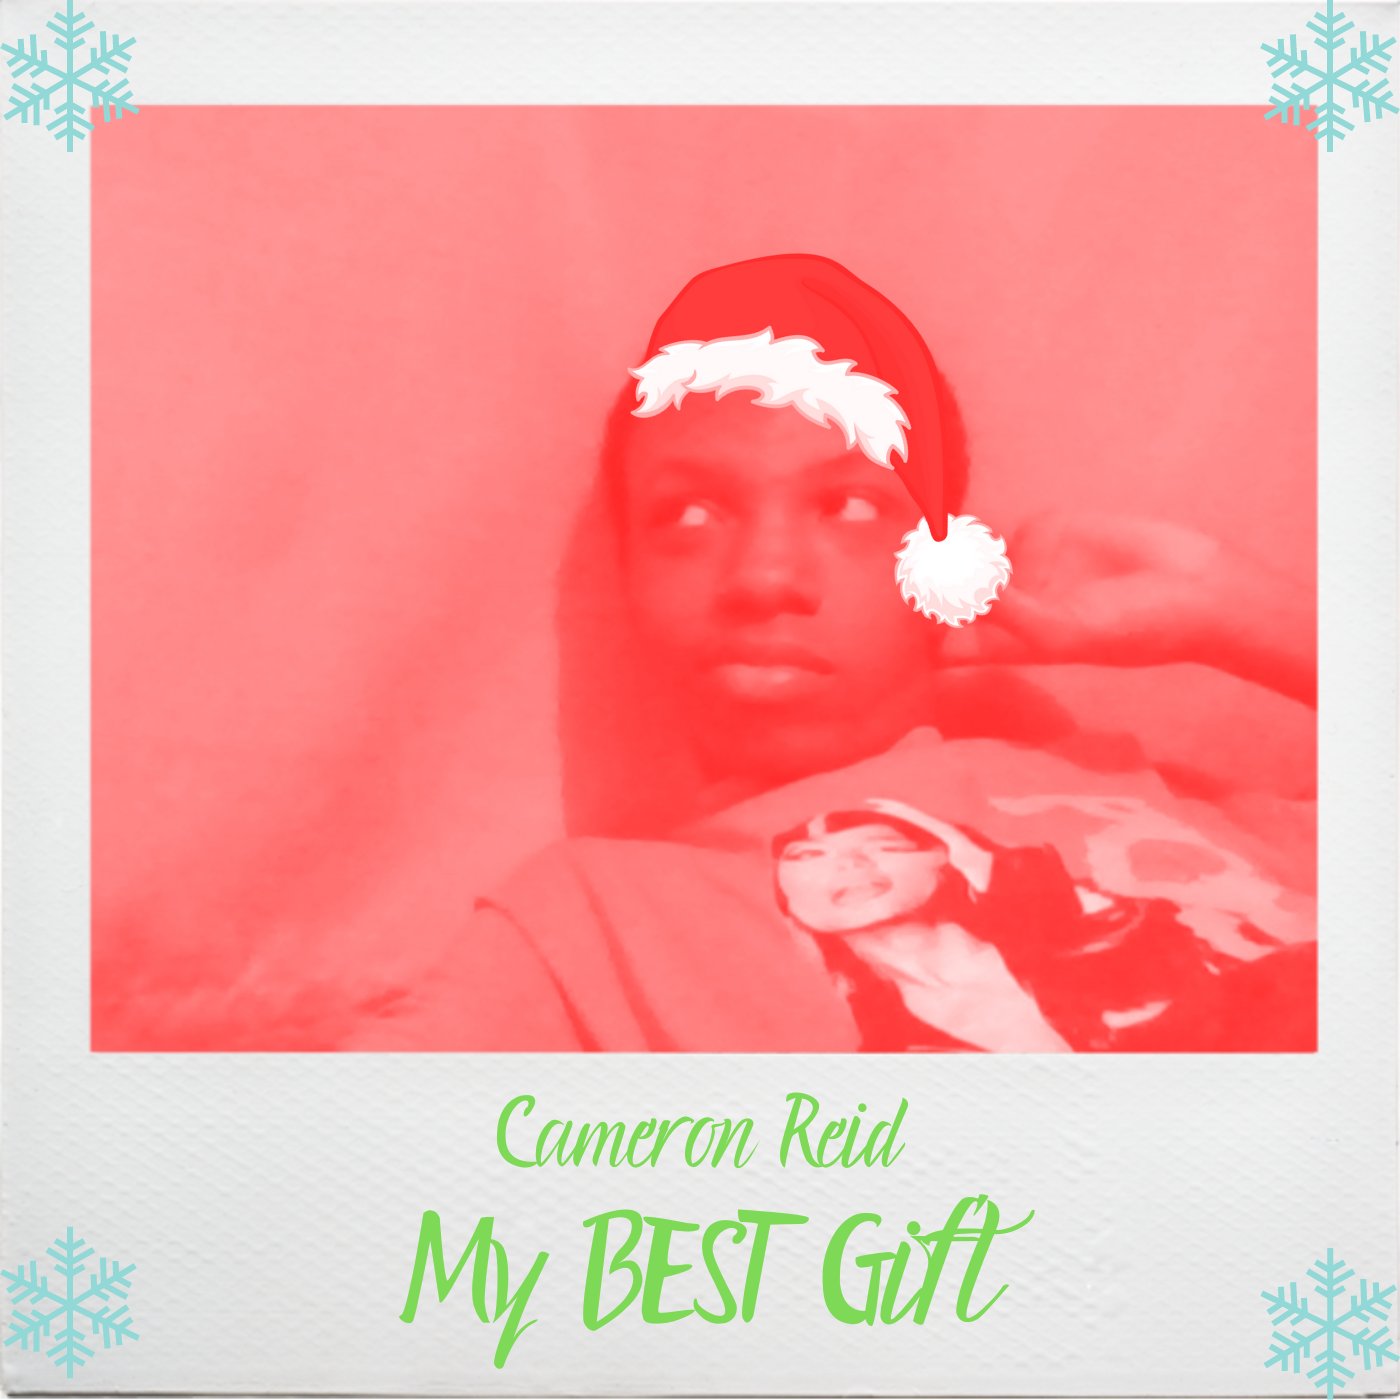 Cameron Reid My Best Gift cover artwork